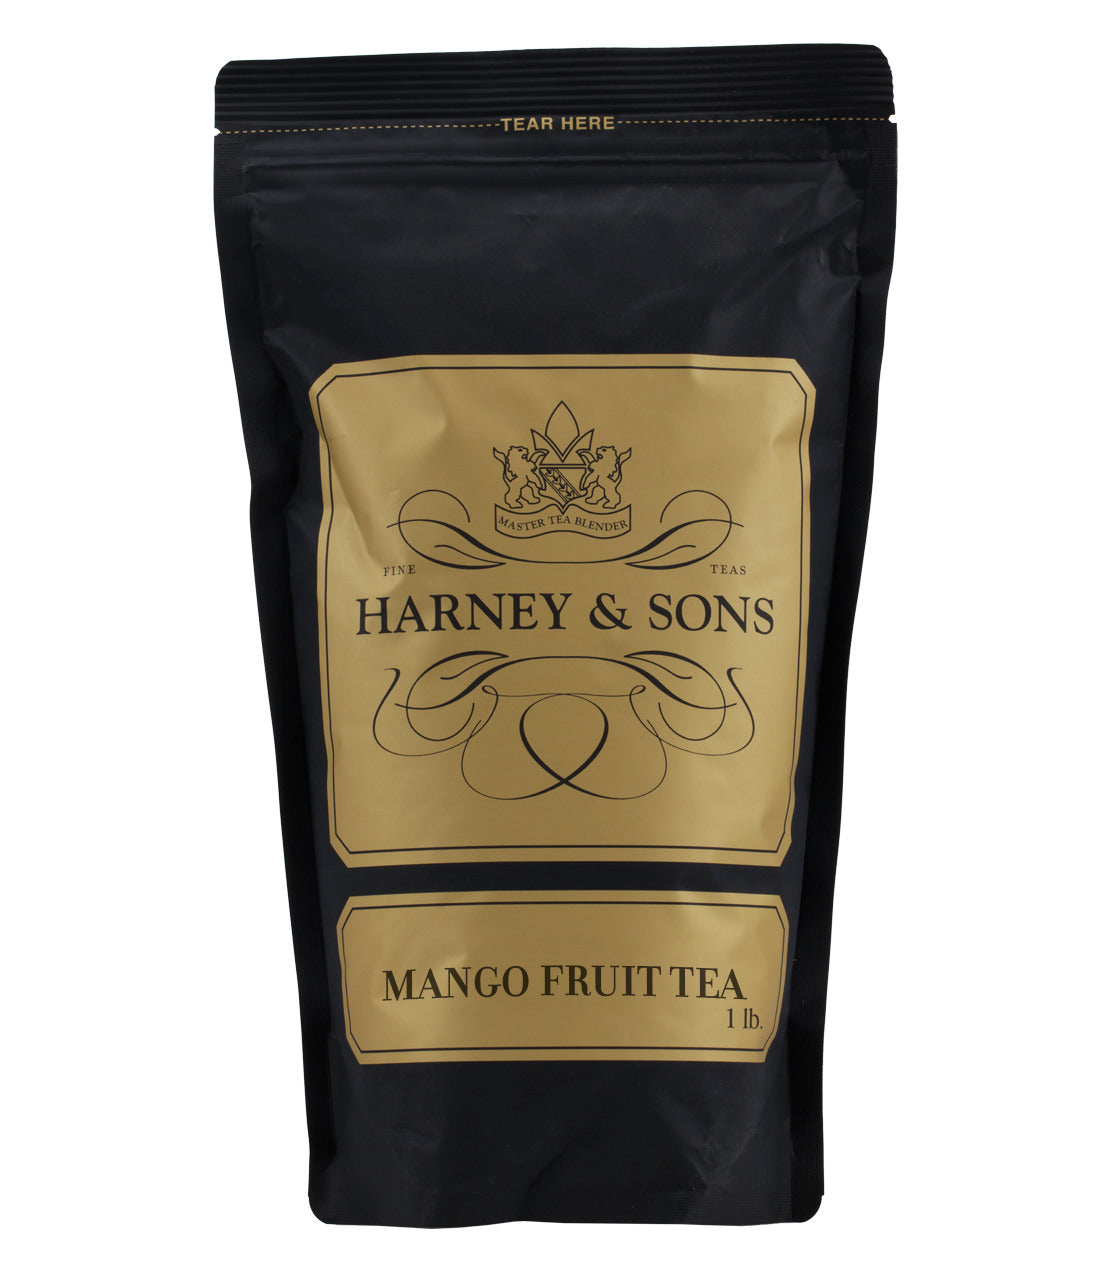 Mango Fruit Tea - Loose 1 lb. Bag - Harney & Sons Fine Teas